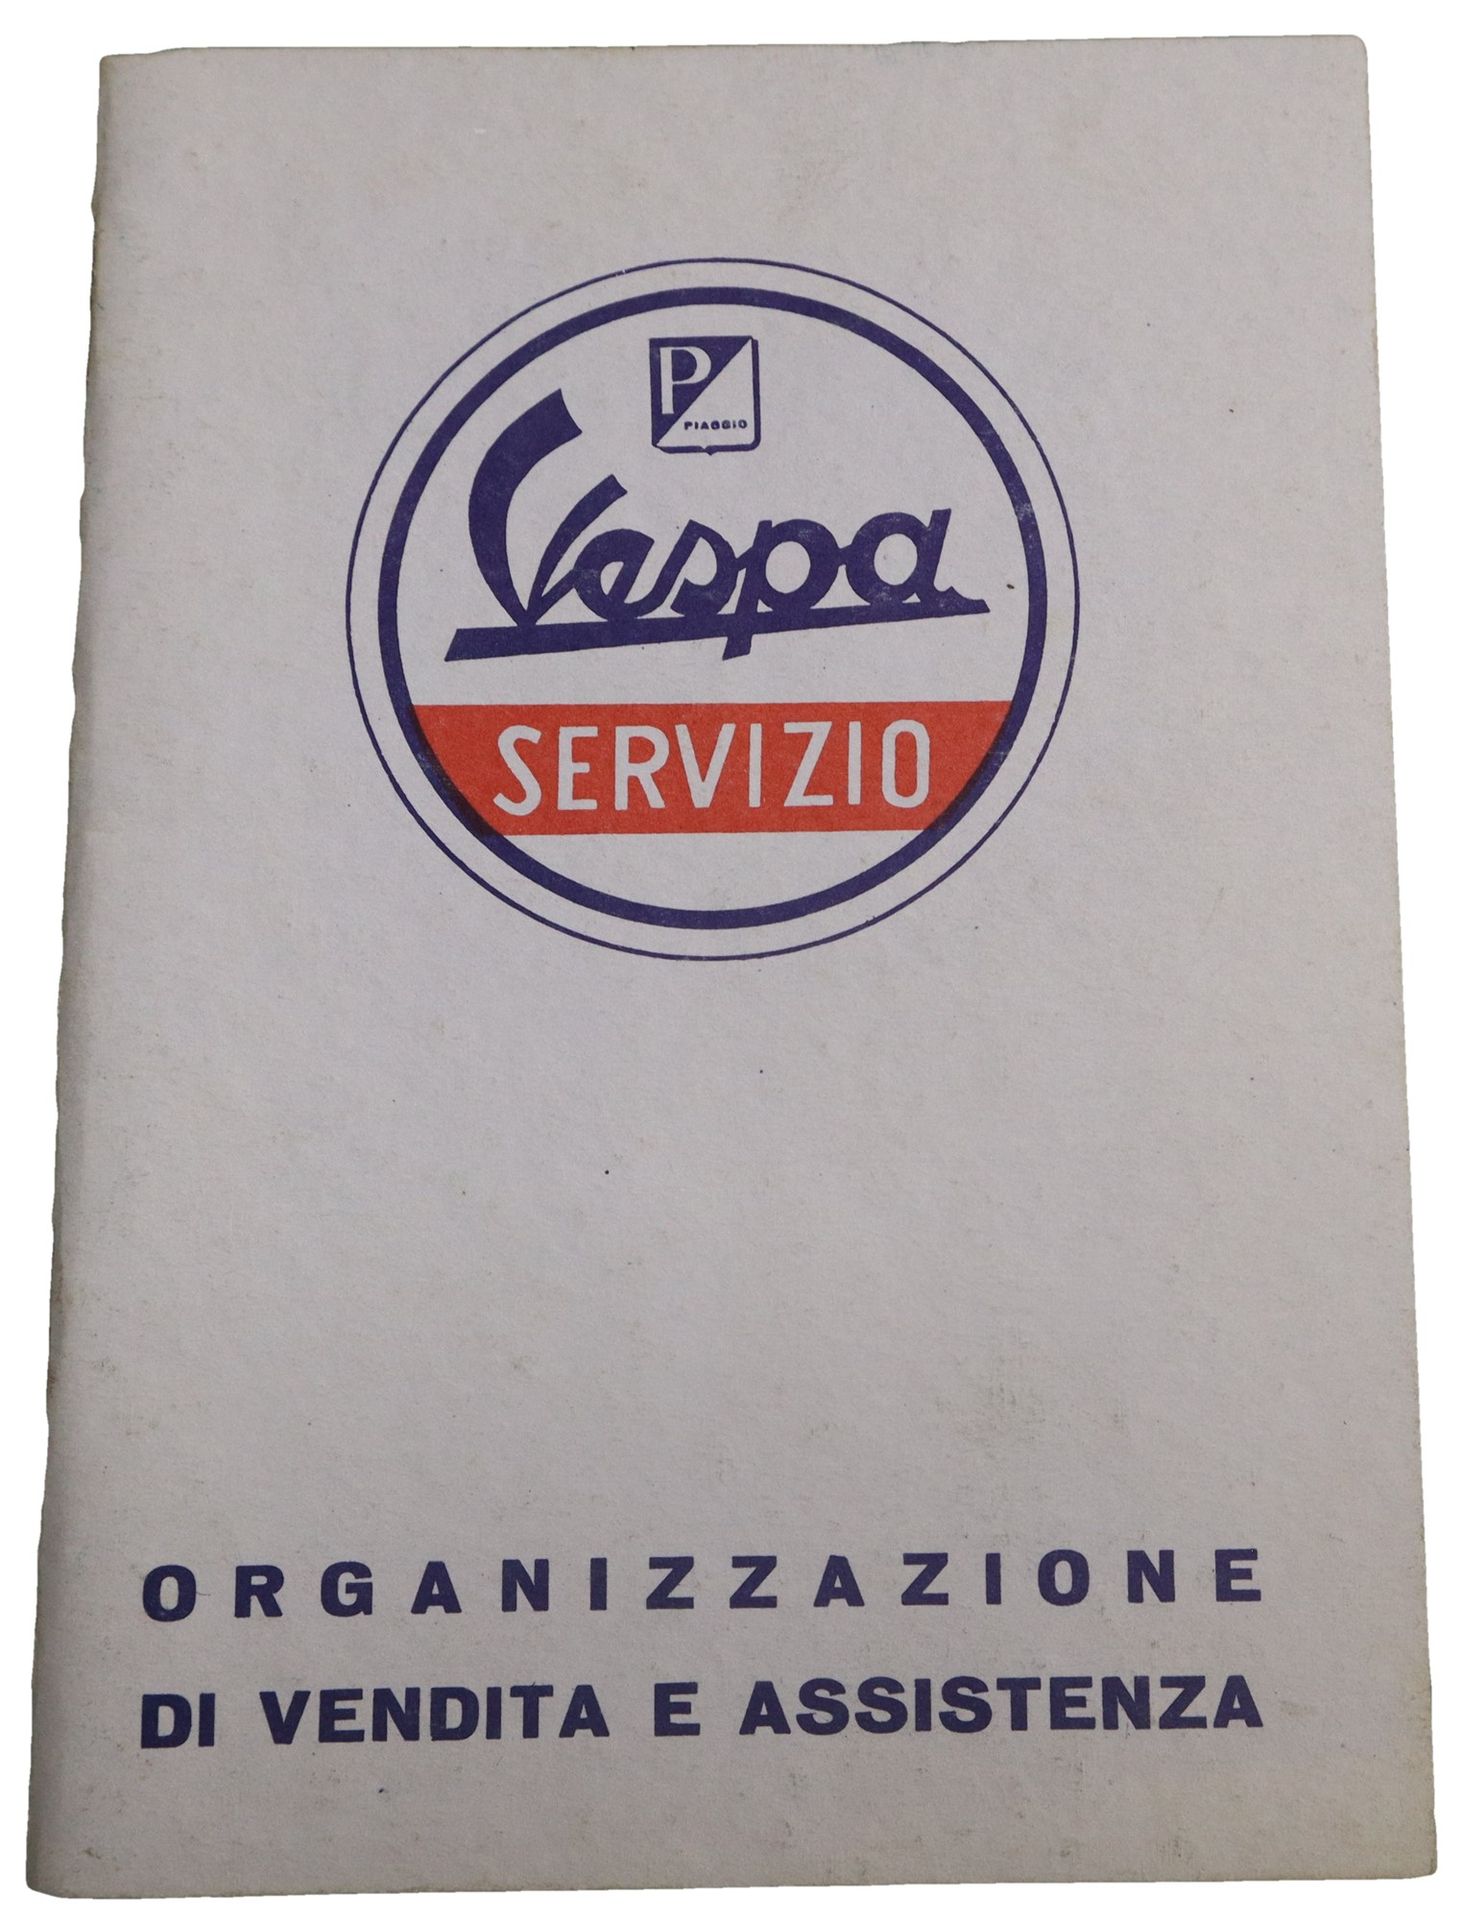 Null Vespa service Sales and service organization, perfect condition